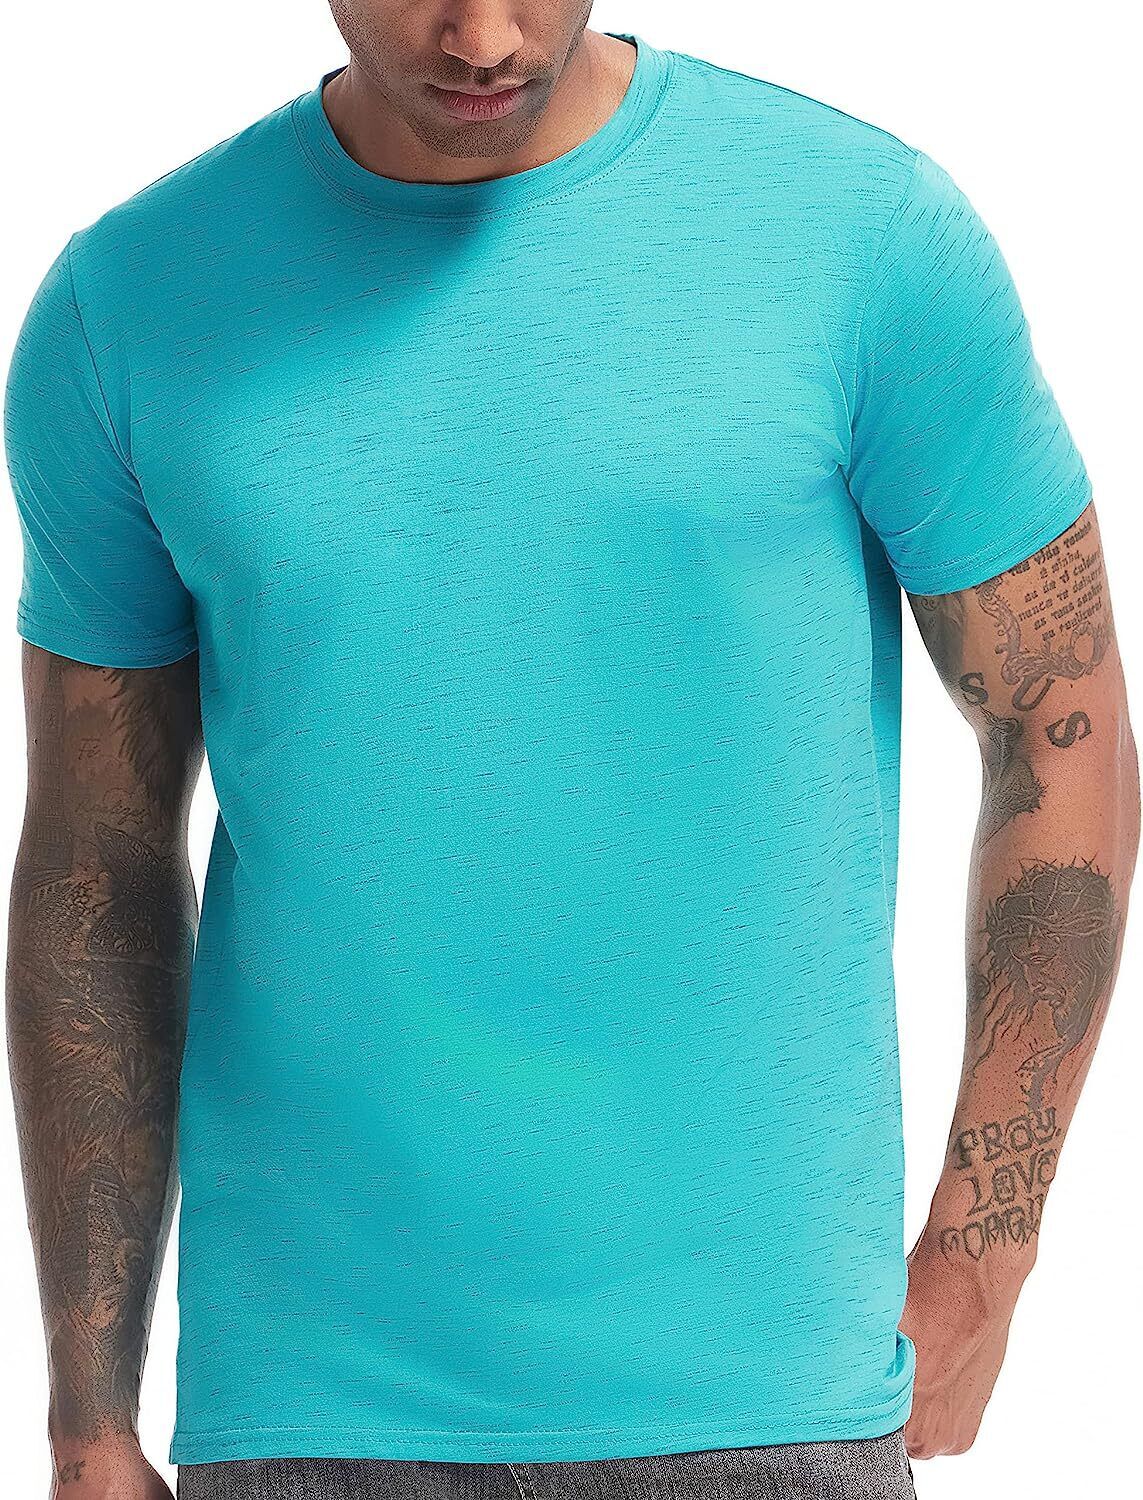 KLIEGOU Men's Crew Neck T Shirts - Casual Stylish Tees for Men | eBay